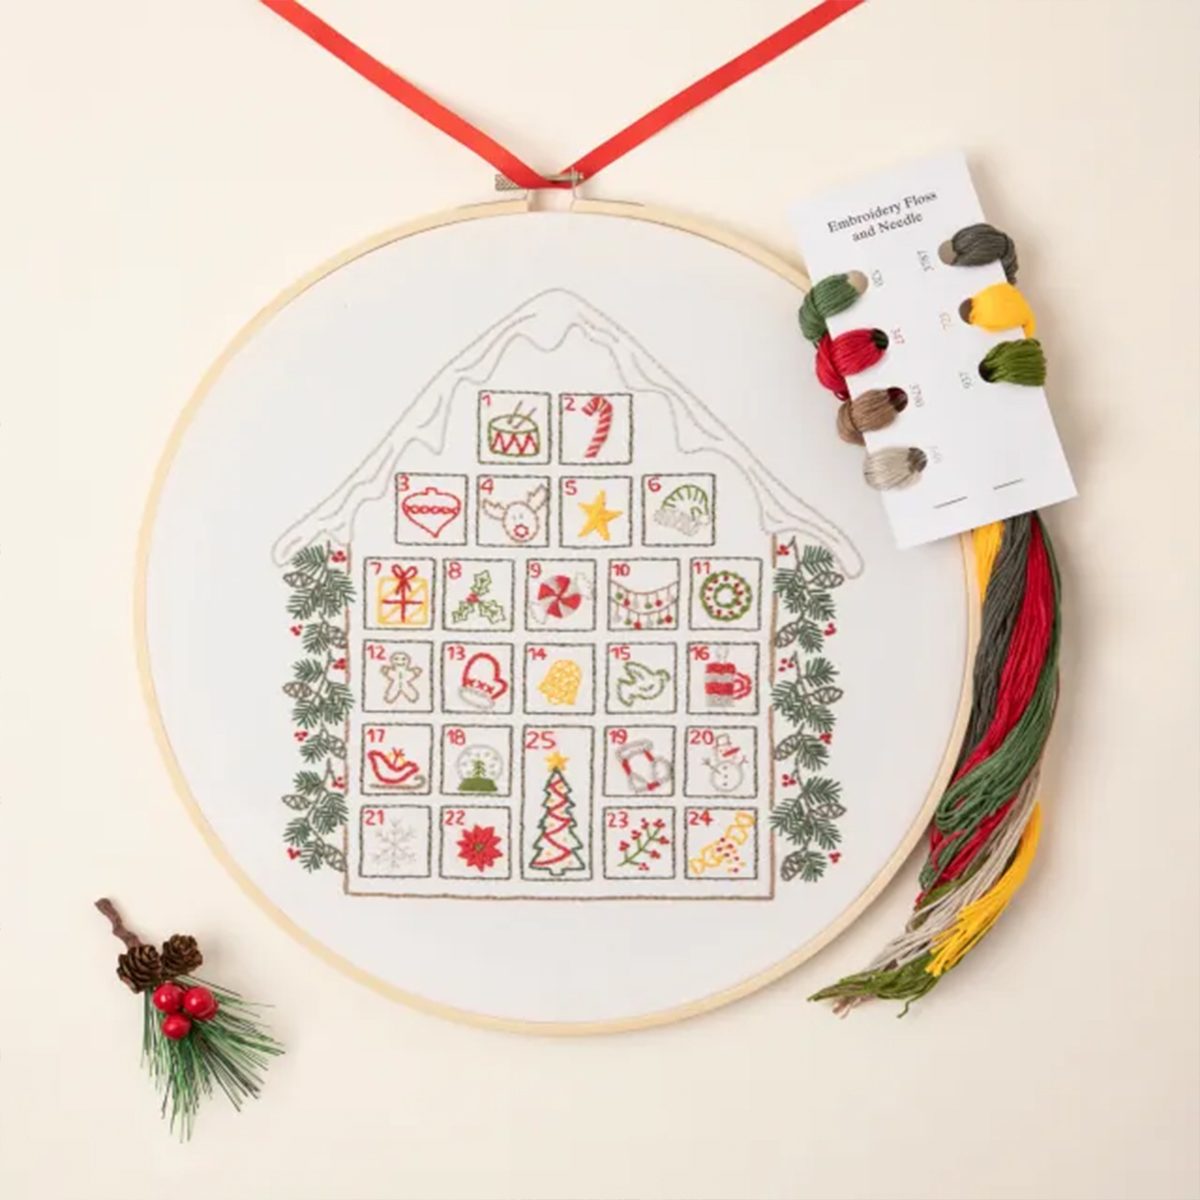 Stitch A Day Embroidery Calendar